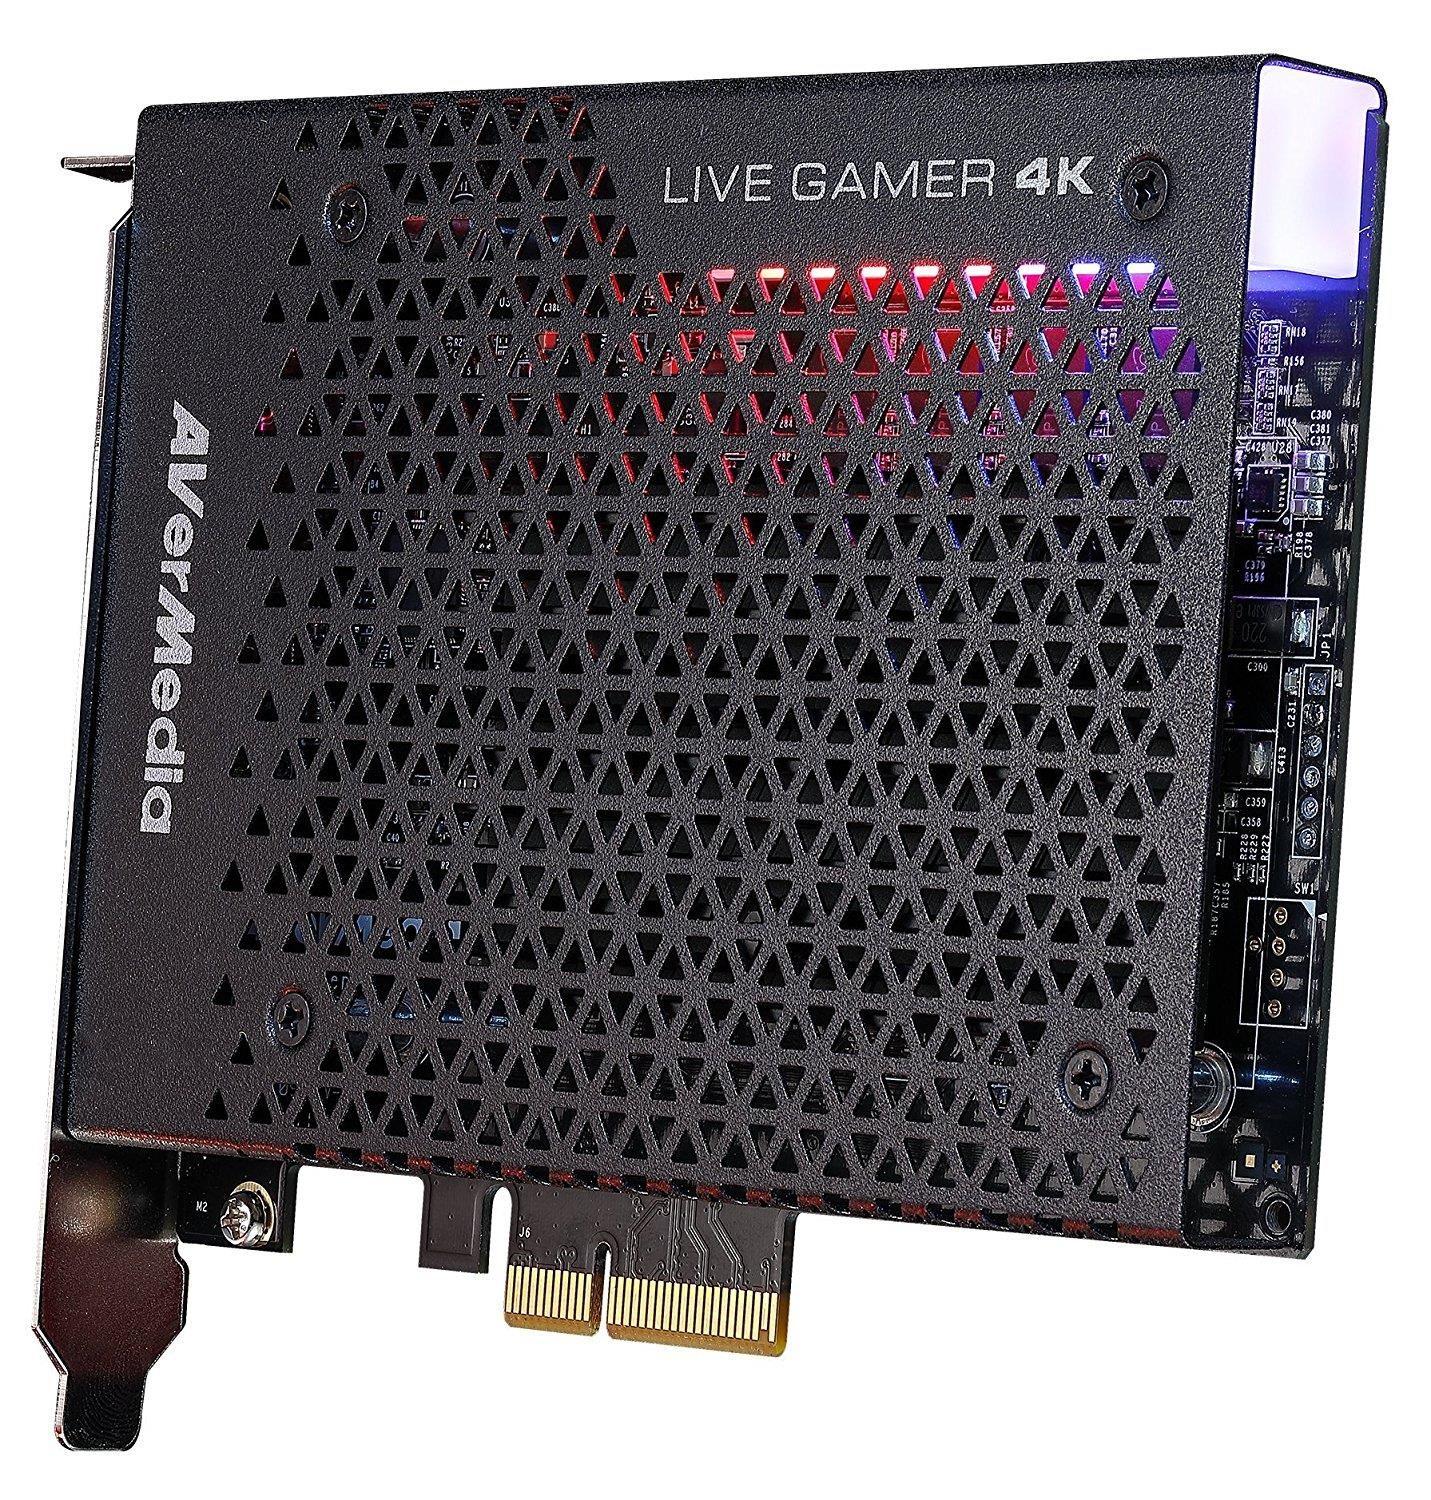 AVerMedia Live Gamer 4K 61GC5730A0AS recorder